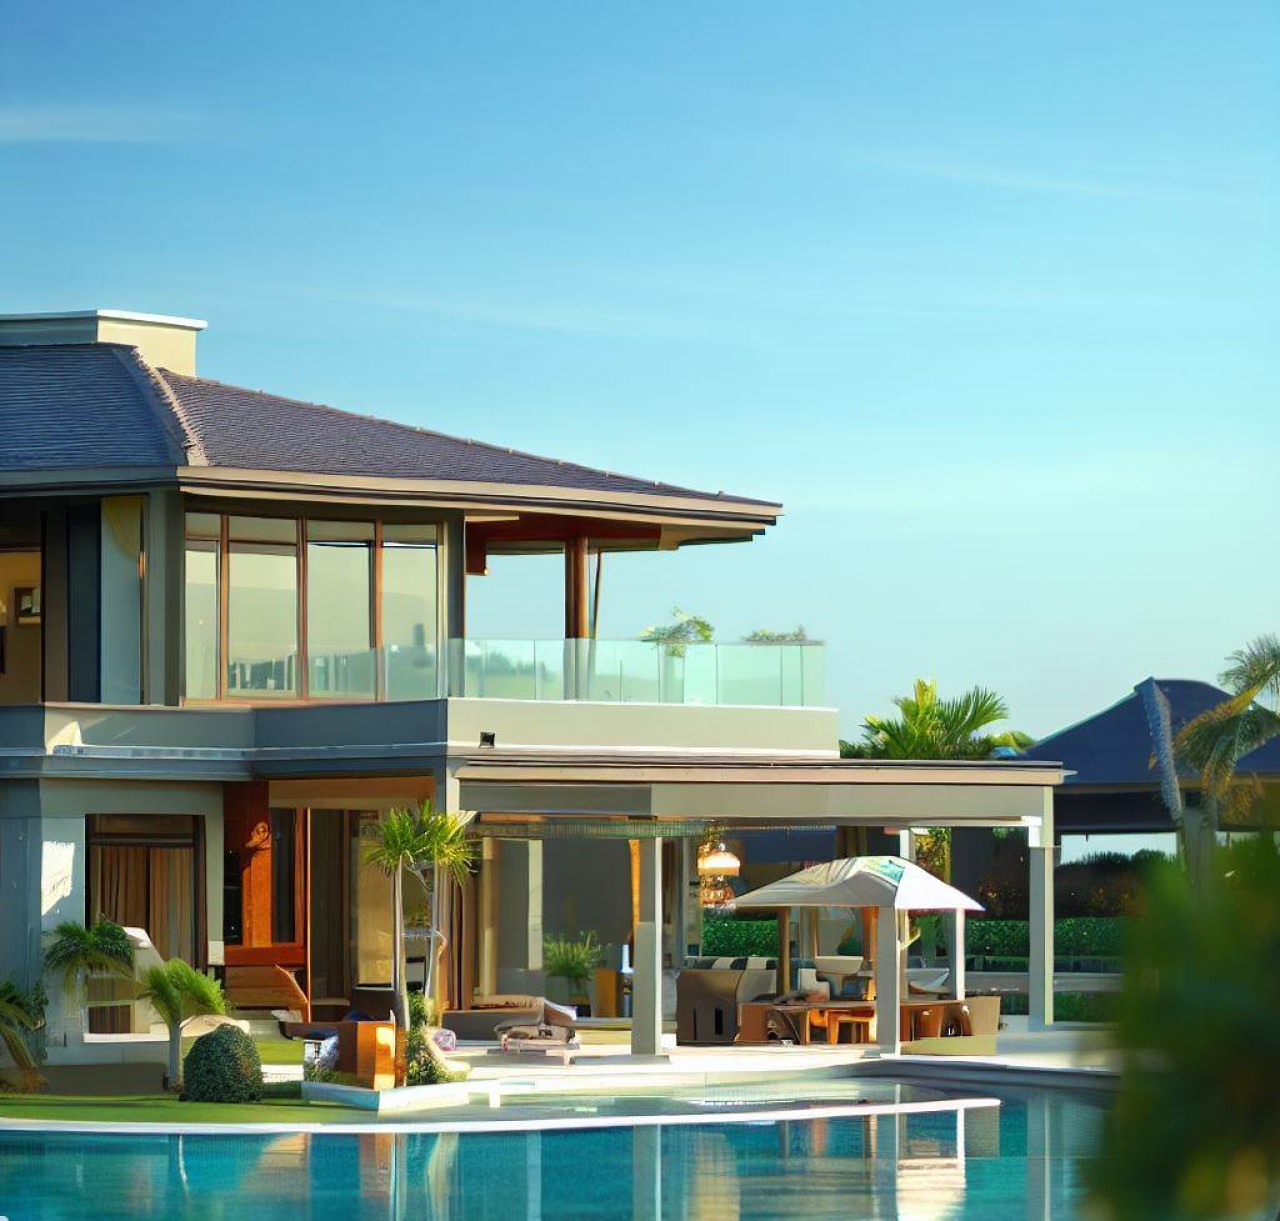 casa moderna con hermosa área de piscina y gazebo